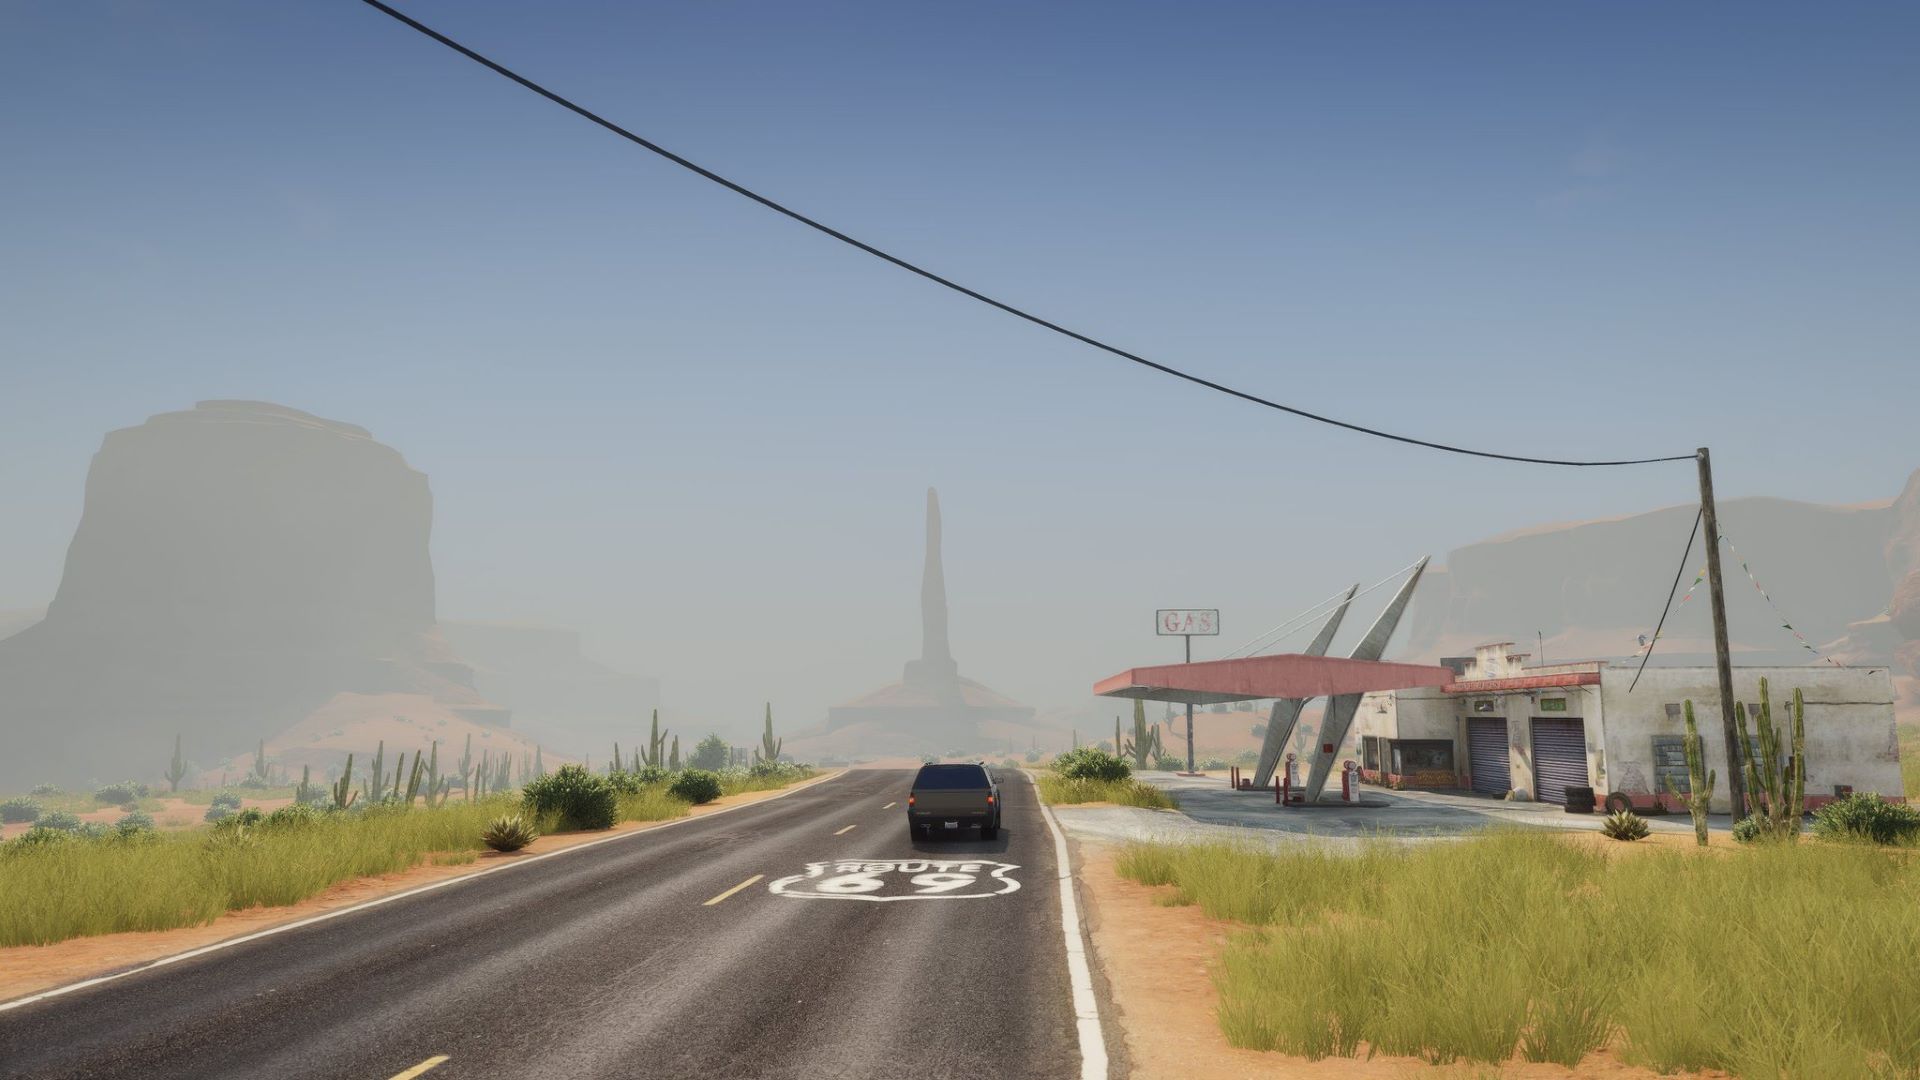 GTA 5 Mod Brings The Last of Us Scenery